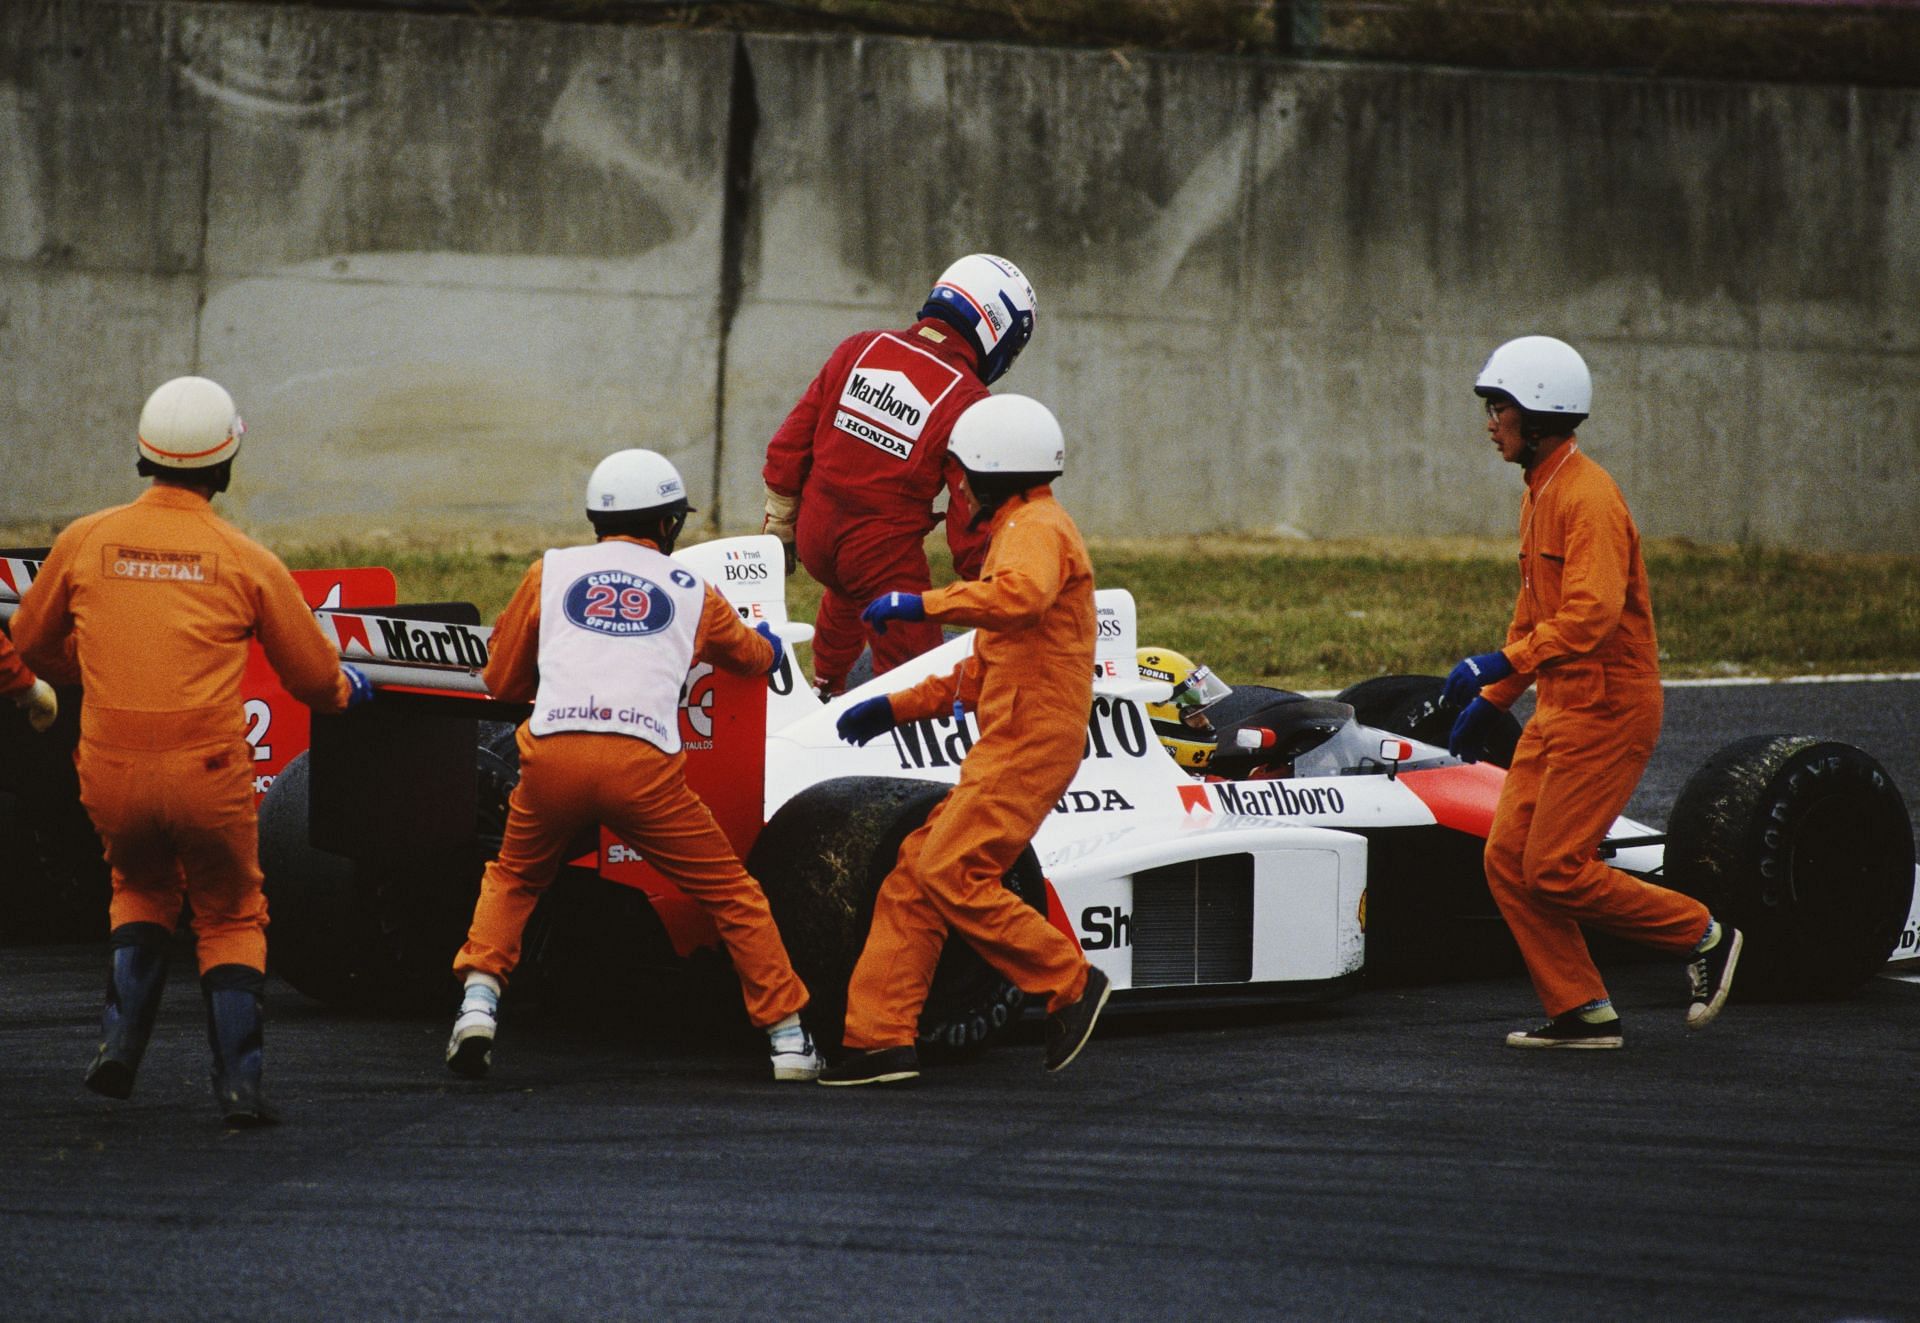 F1 Grand Prix of Japan, 1989 - Alain Prost and Ayrton Senna collide